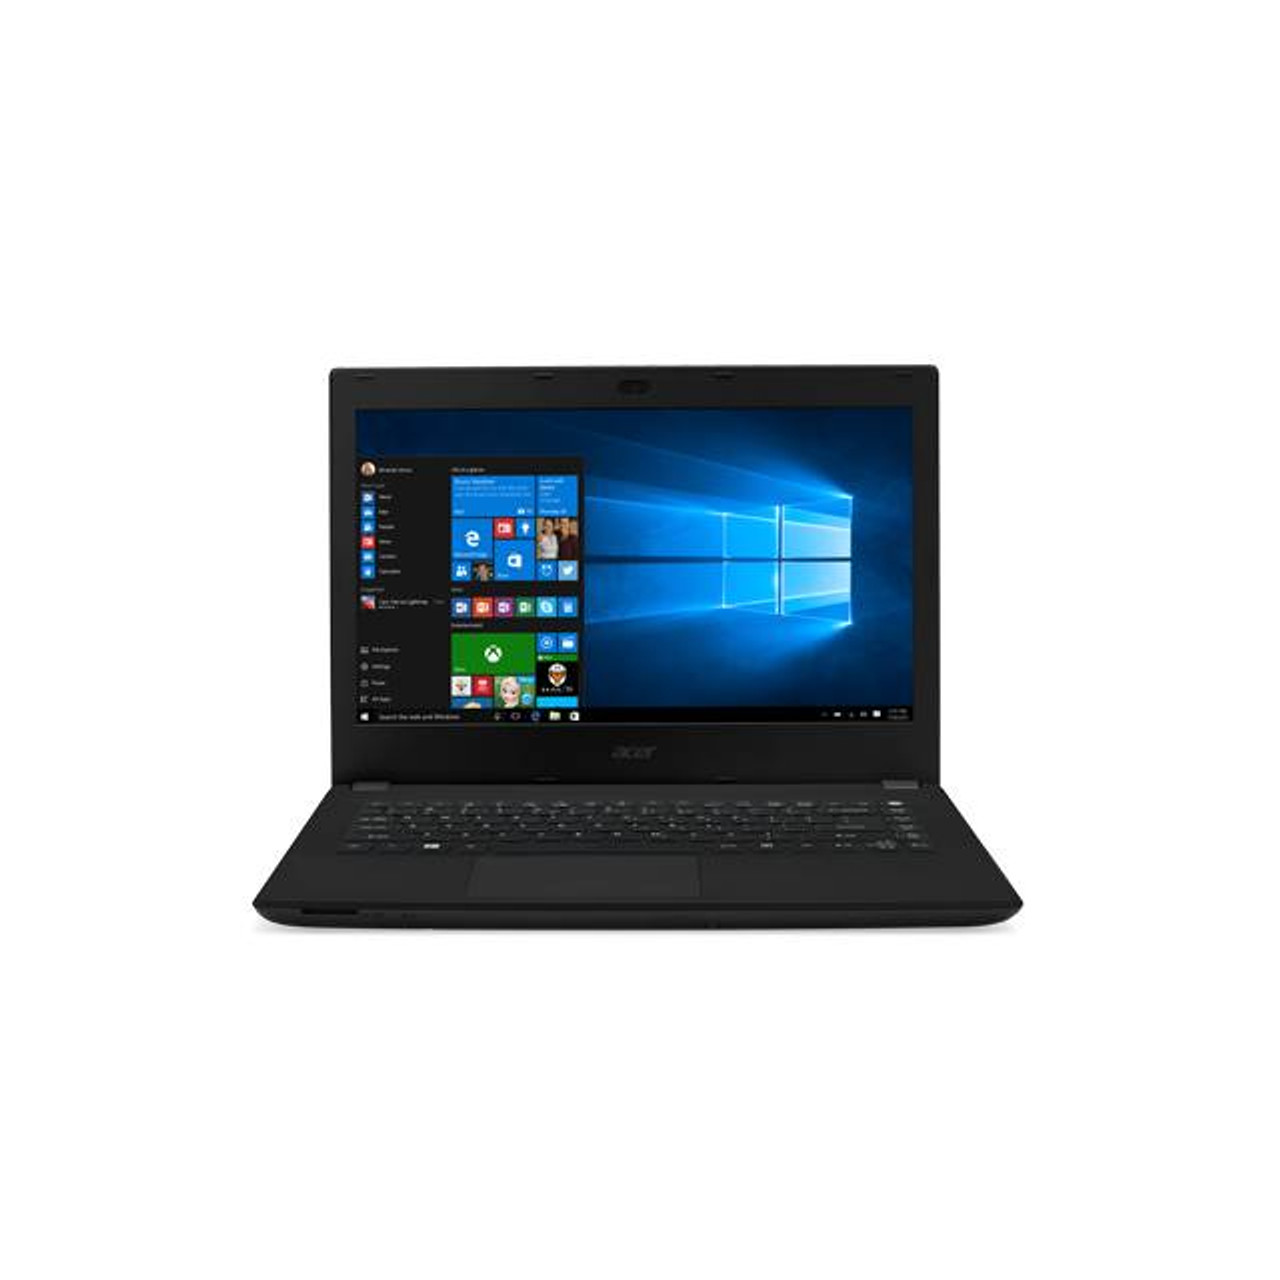 Acer TravelMate P2 TMP248-M-57J4 14 inch Intel Core i5-6200U 2.3GHz/ 4GB DDR3L/ 500GB HDD/ USB3.0/ Windows 7 Professional or Windows 10 Pro Notebook (Black)